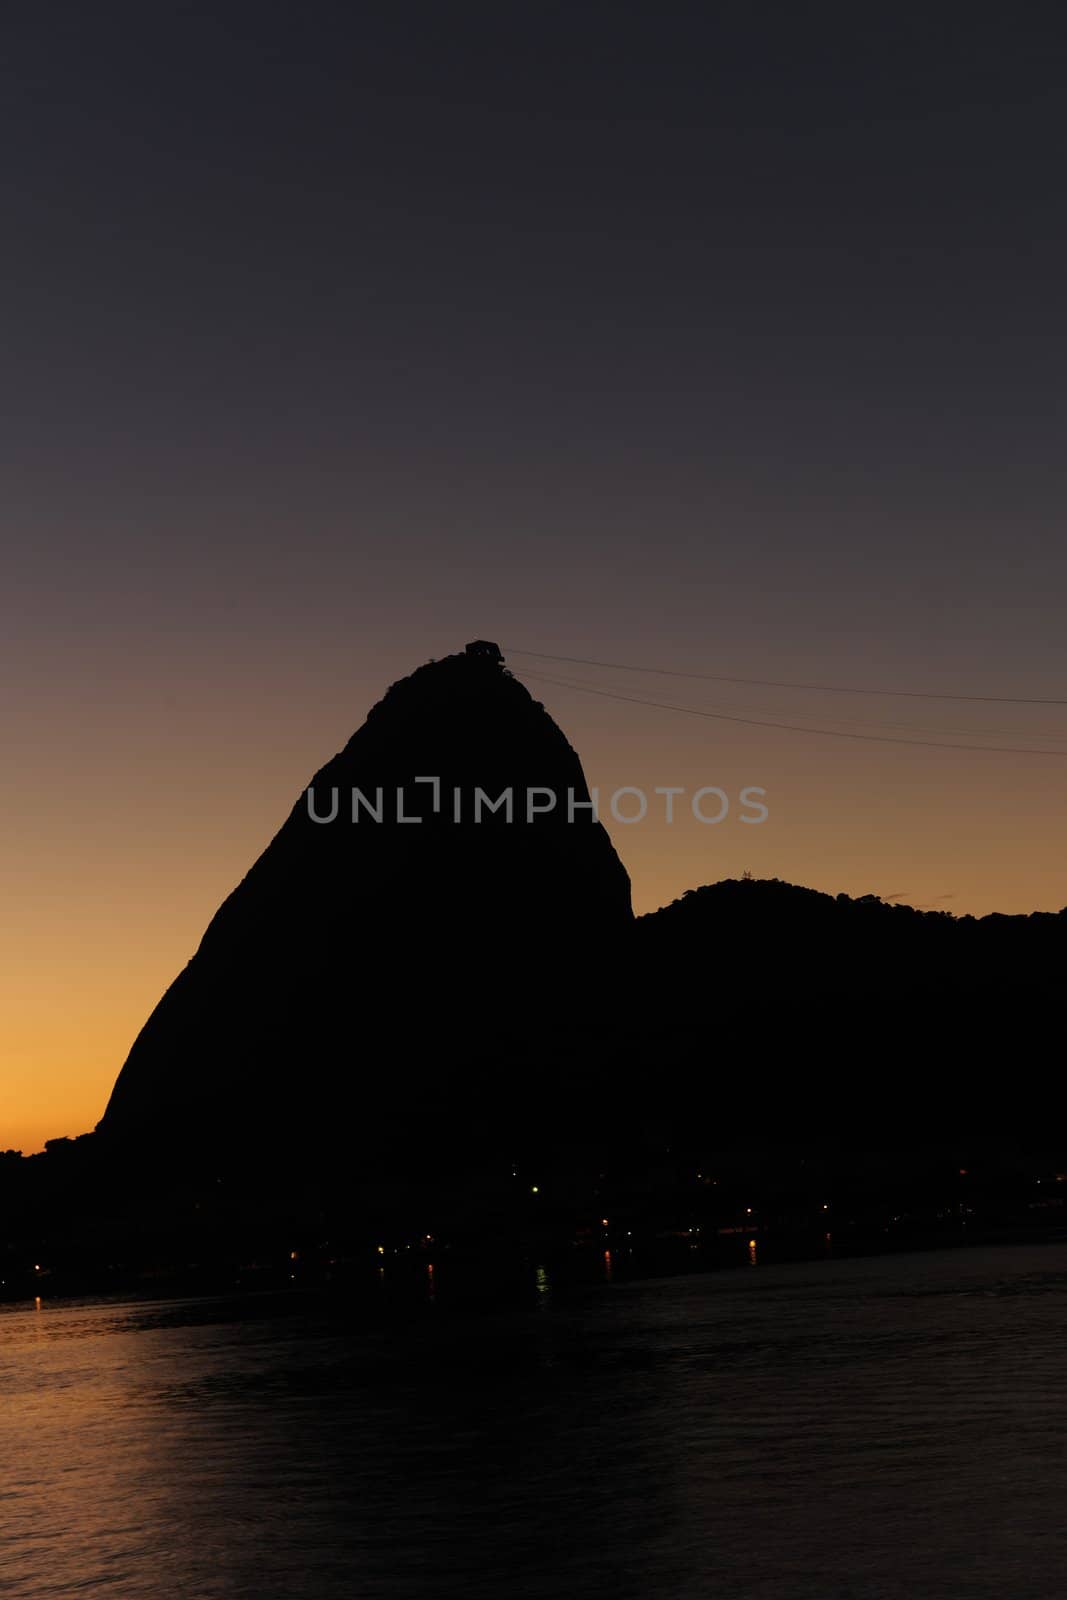 Sunrise in Rio de Janeiro, Sugarloaf Mountain by mangostock